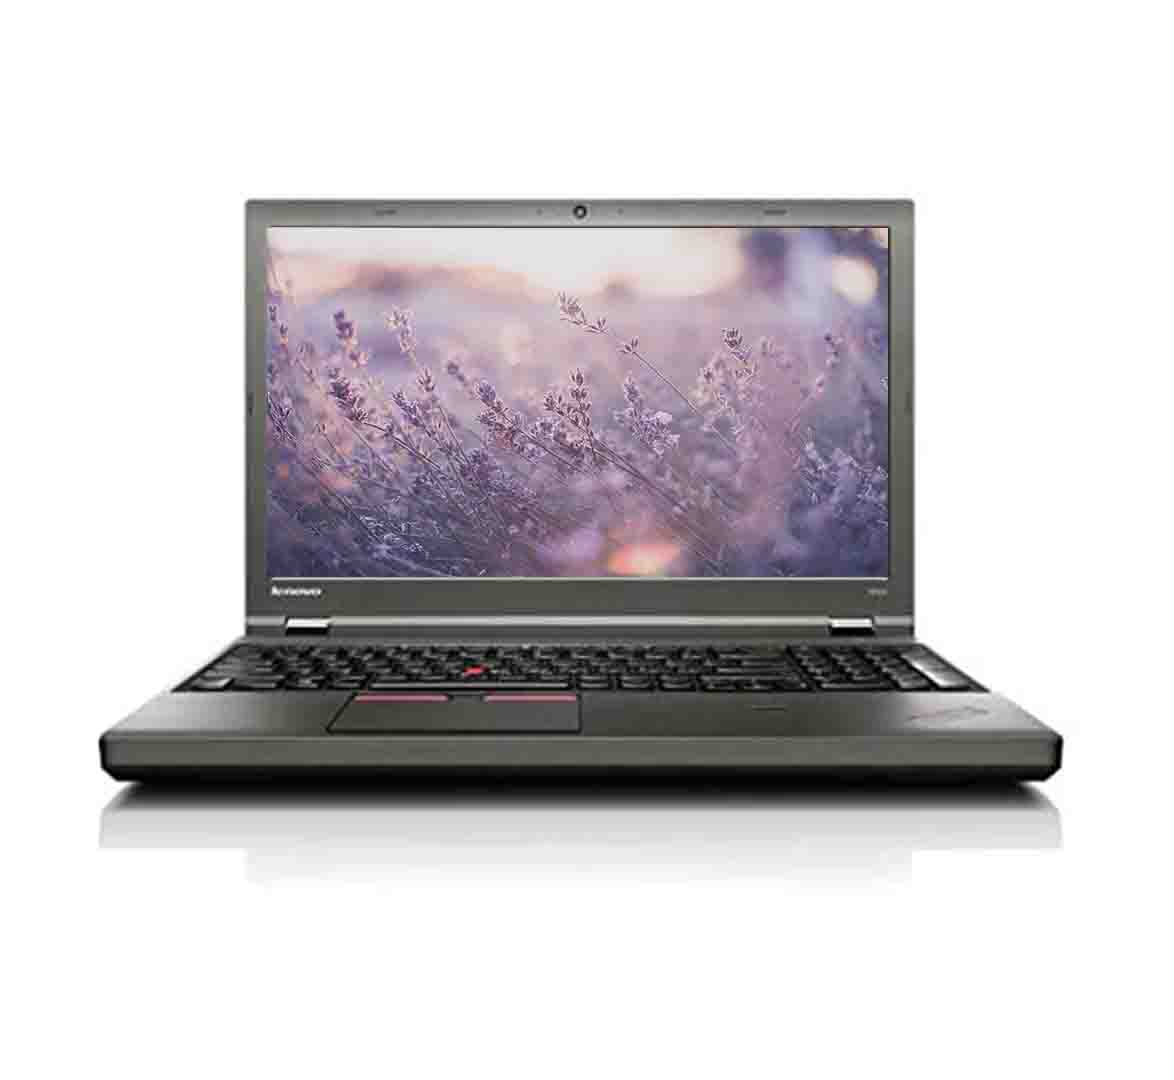 Lenovo ThinkPad W541 Business Laptop, Intel Core i5-4th Generation CPU, 16GB RAM, 512GB SSD, 15.6 inch Display, Windows 10 Pro, Refurbished Laptop